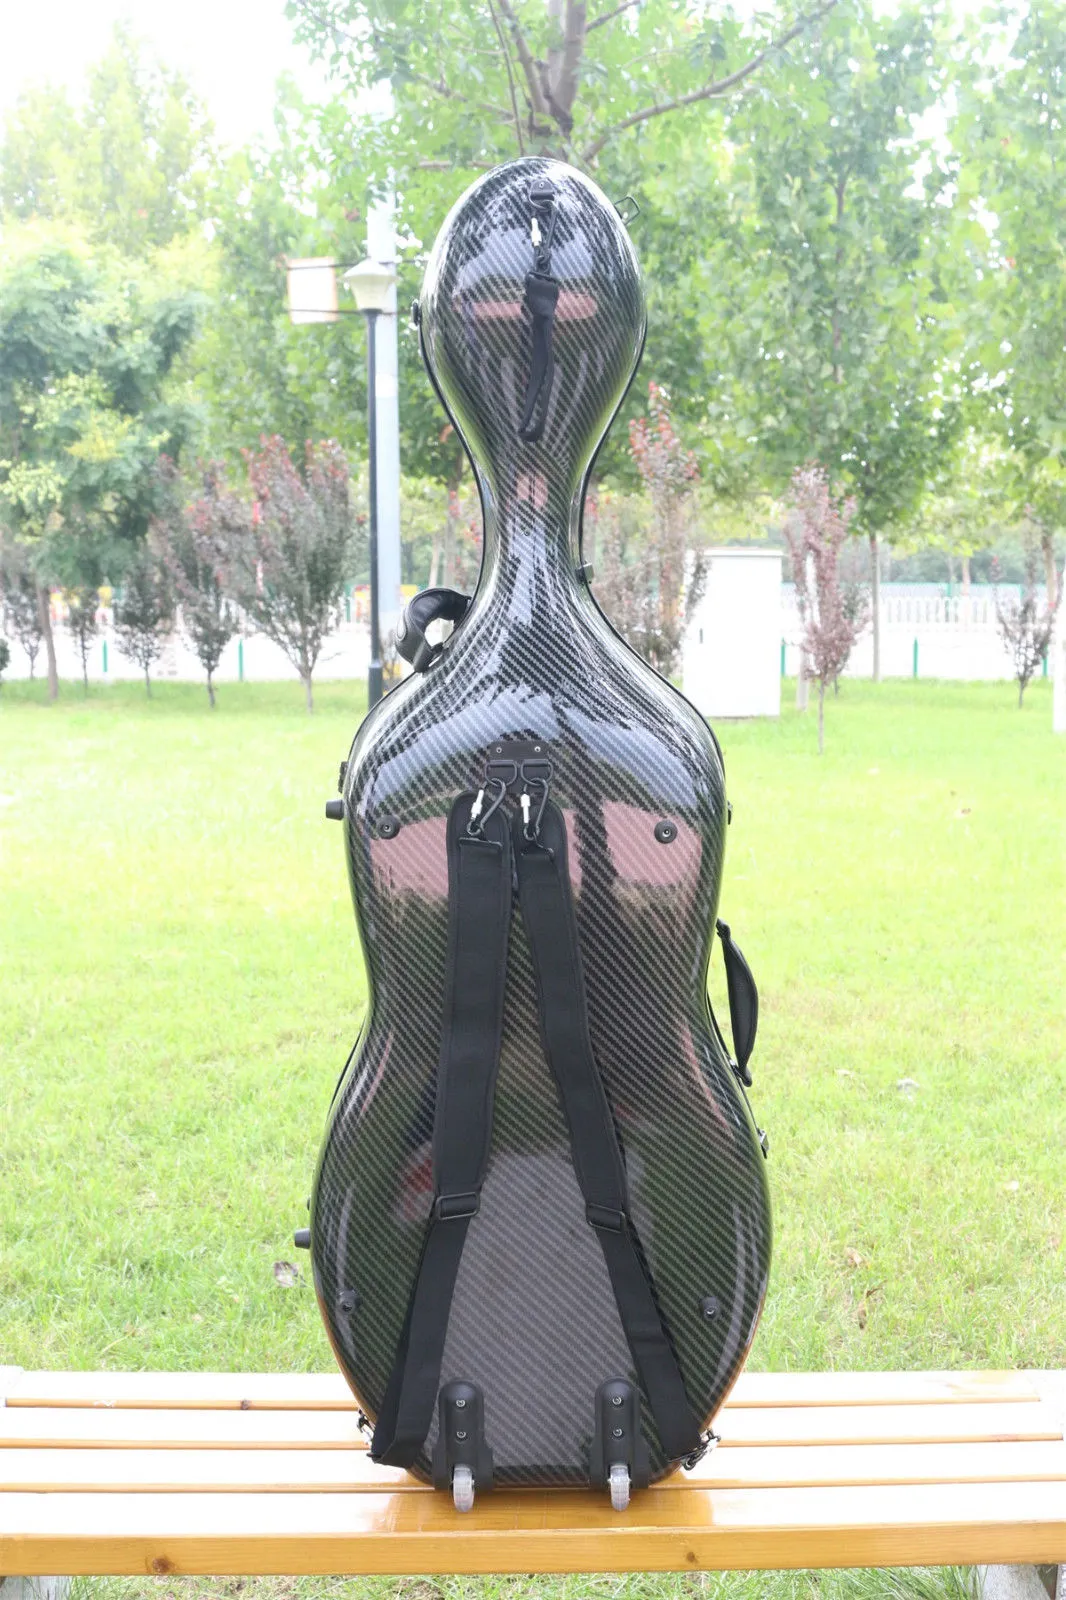 44 electric cello case Mixed Carbon Fiber Strong Light 37kg Hard Case Black color Full size Wheels8046979